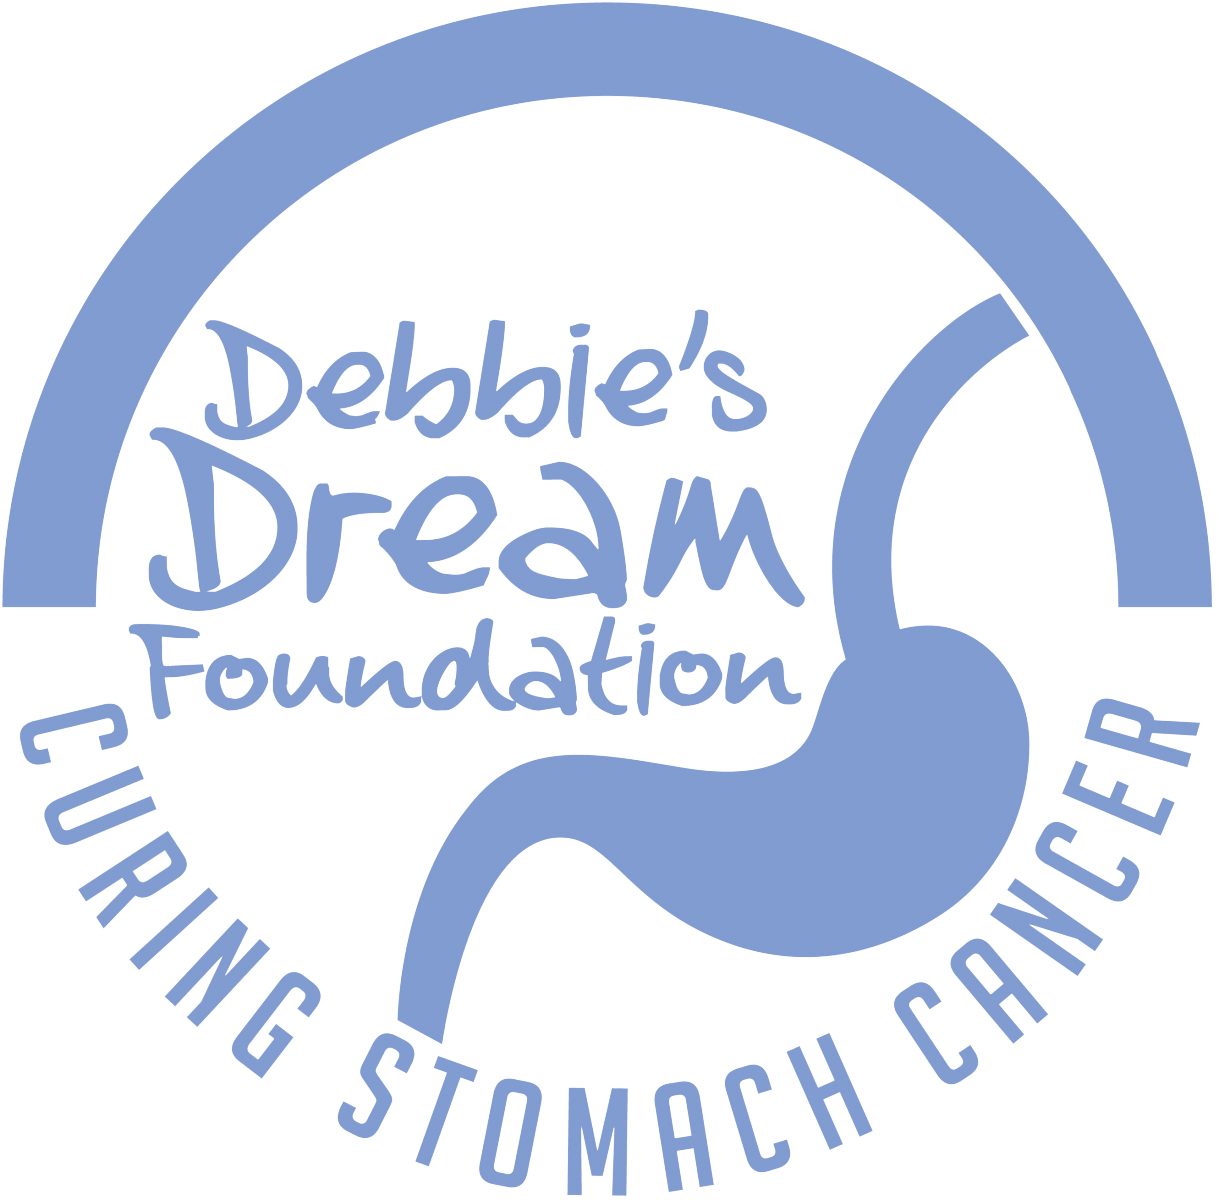 Debbie's Dream logo